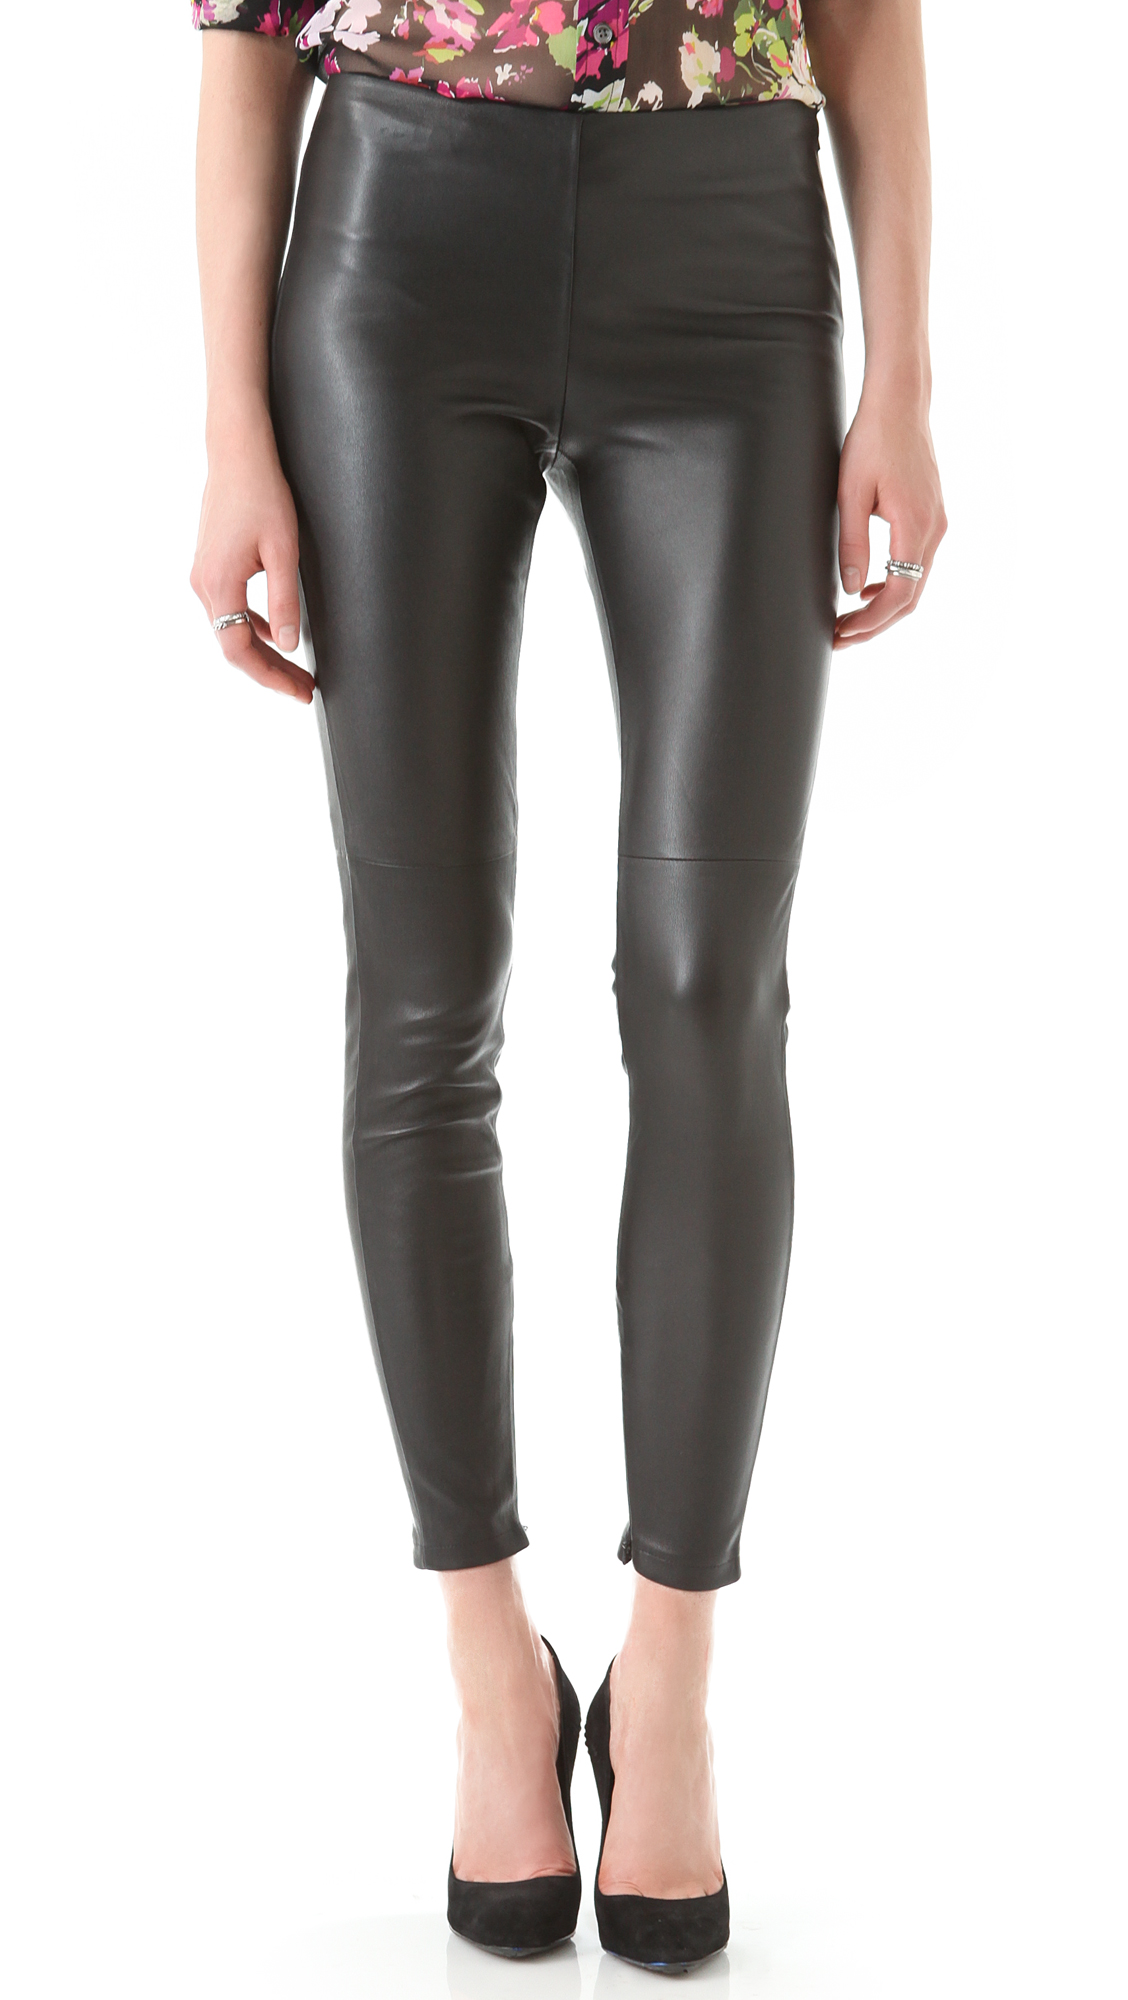 Lyst - Victoria Beckham Leather Leggings in Black